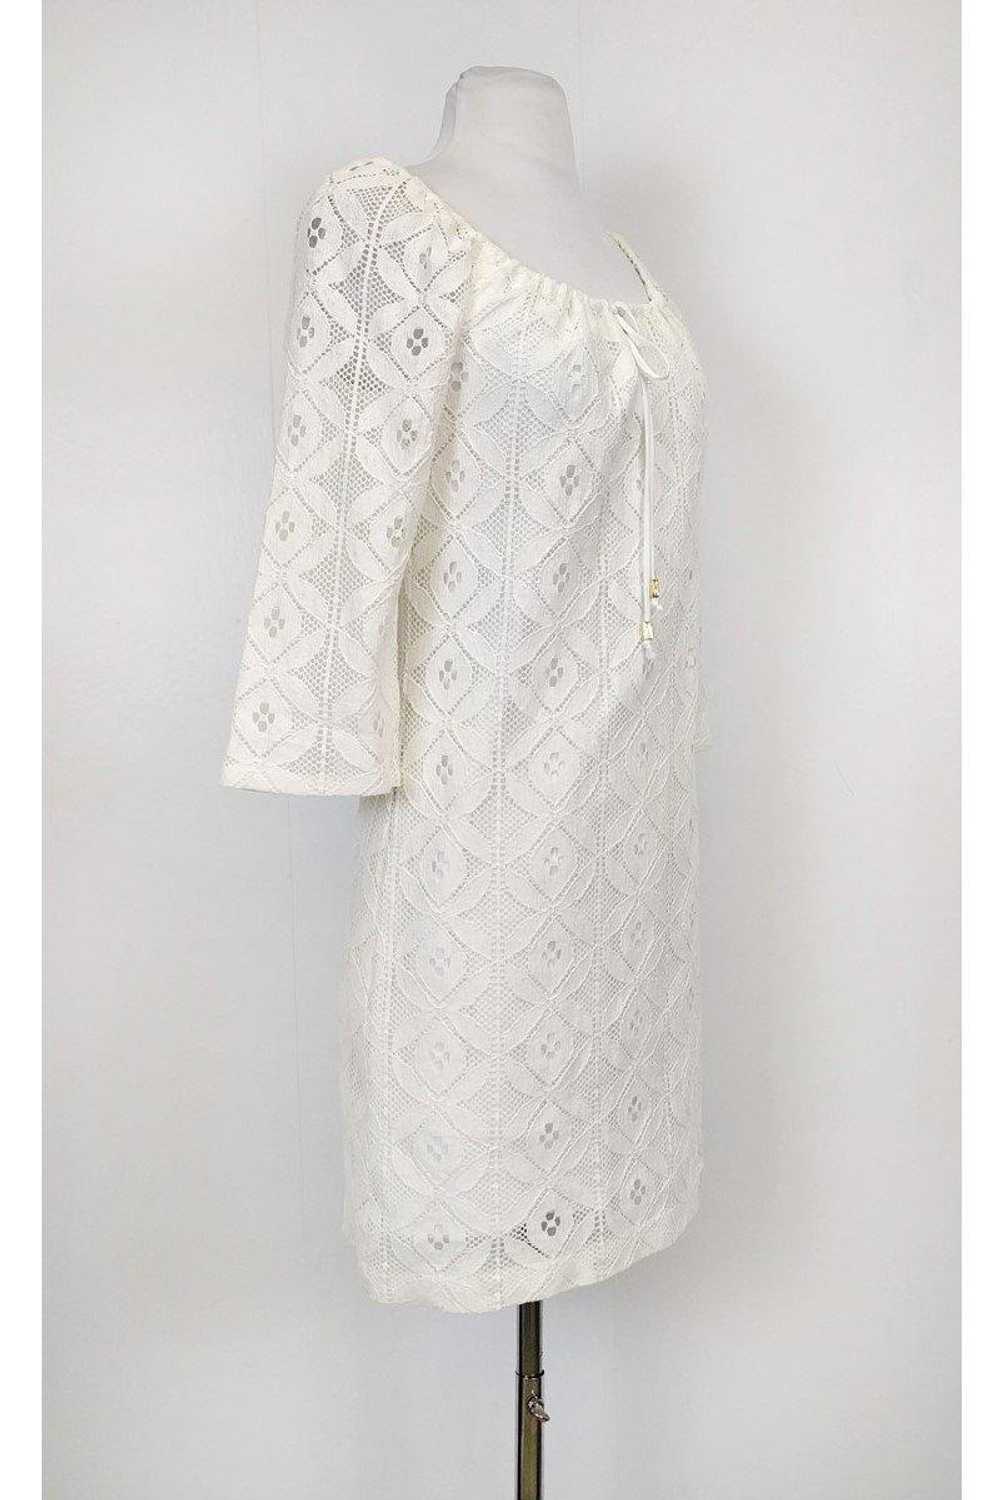 Trina Turk - White Lace Dress Sz 0 - image 2